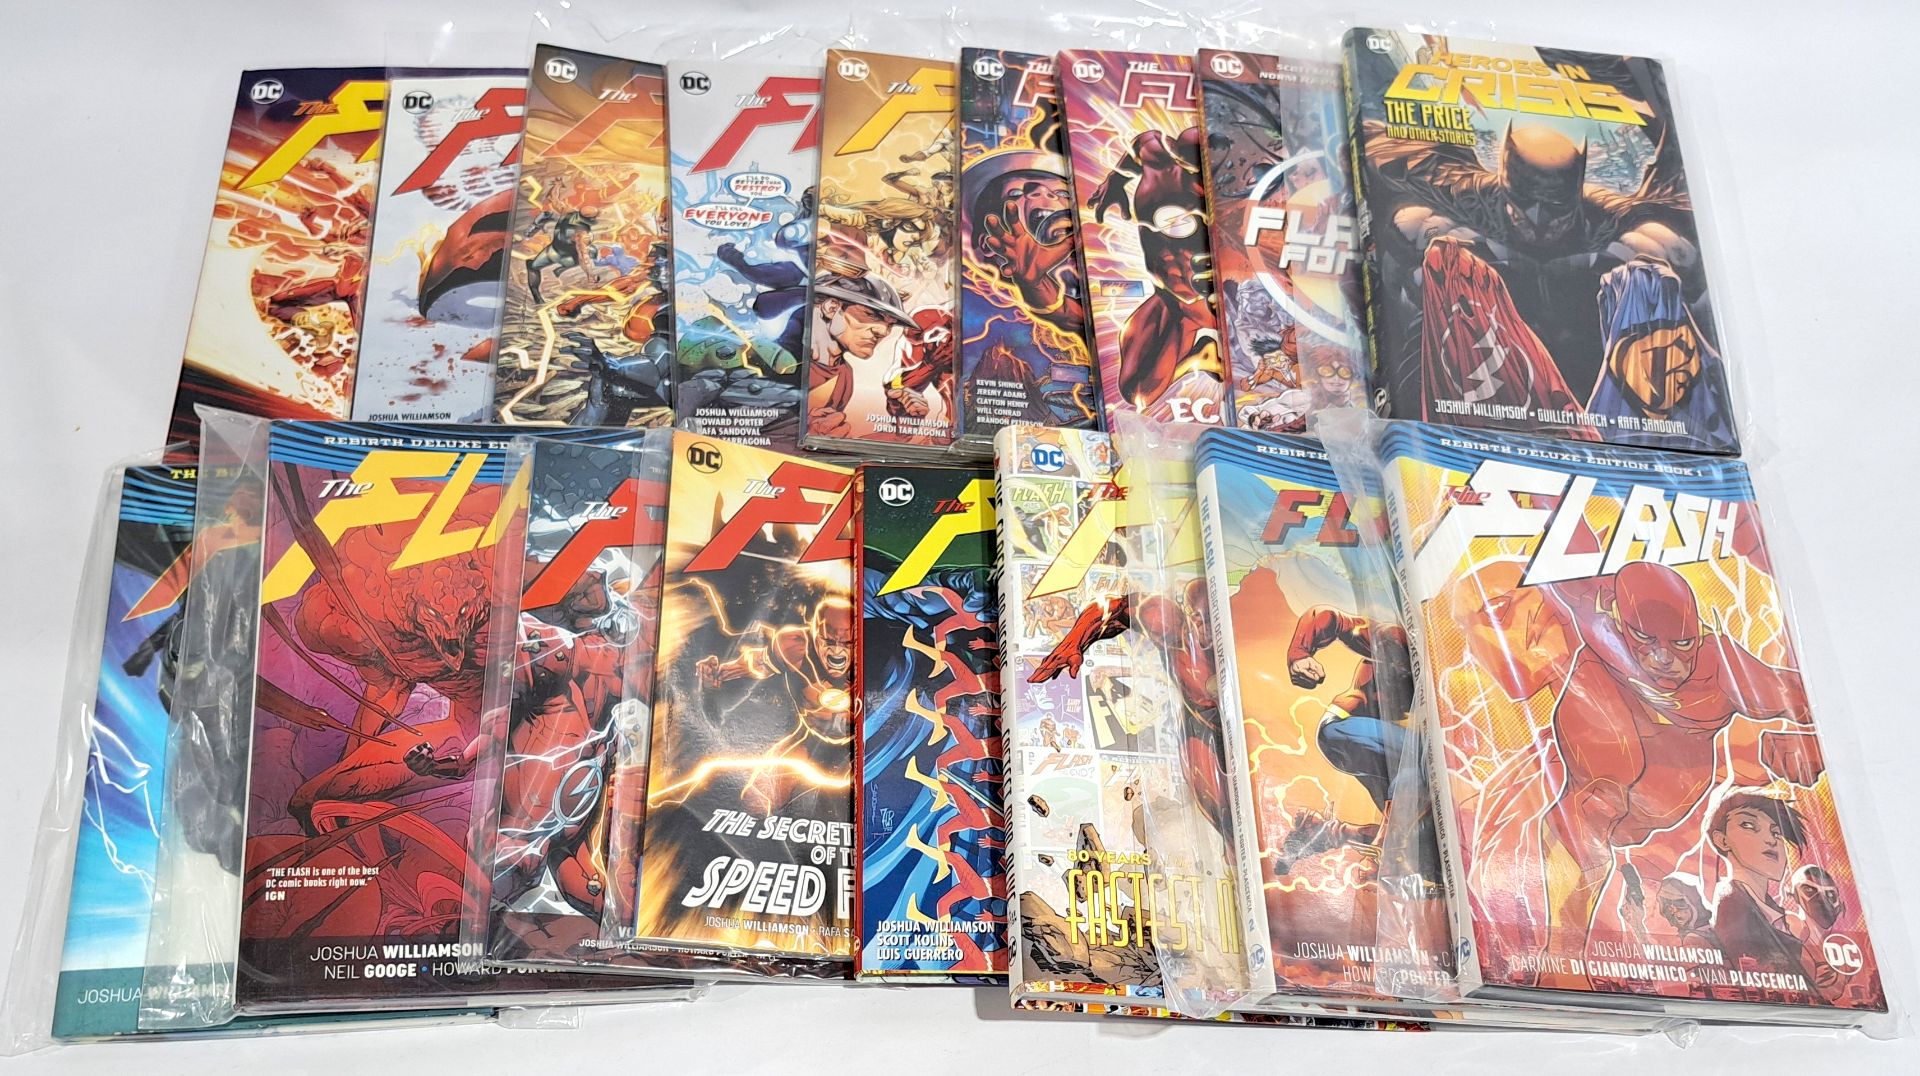 Quantity of DC Comics Flash Graphic Novels & Trade Paperbacks - Image 2 of 2